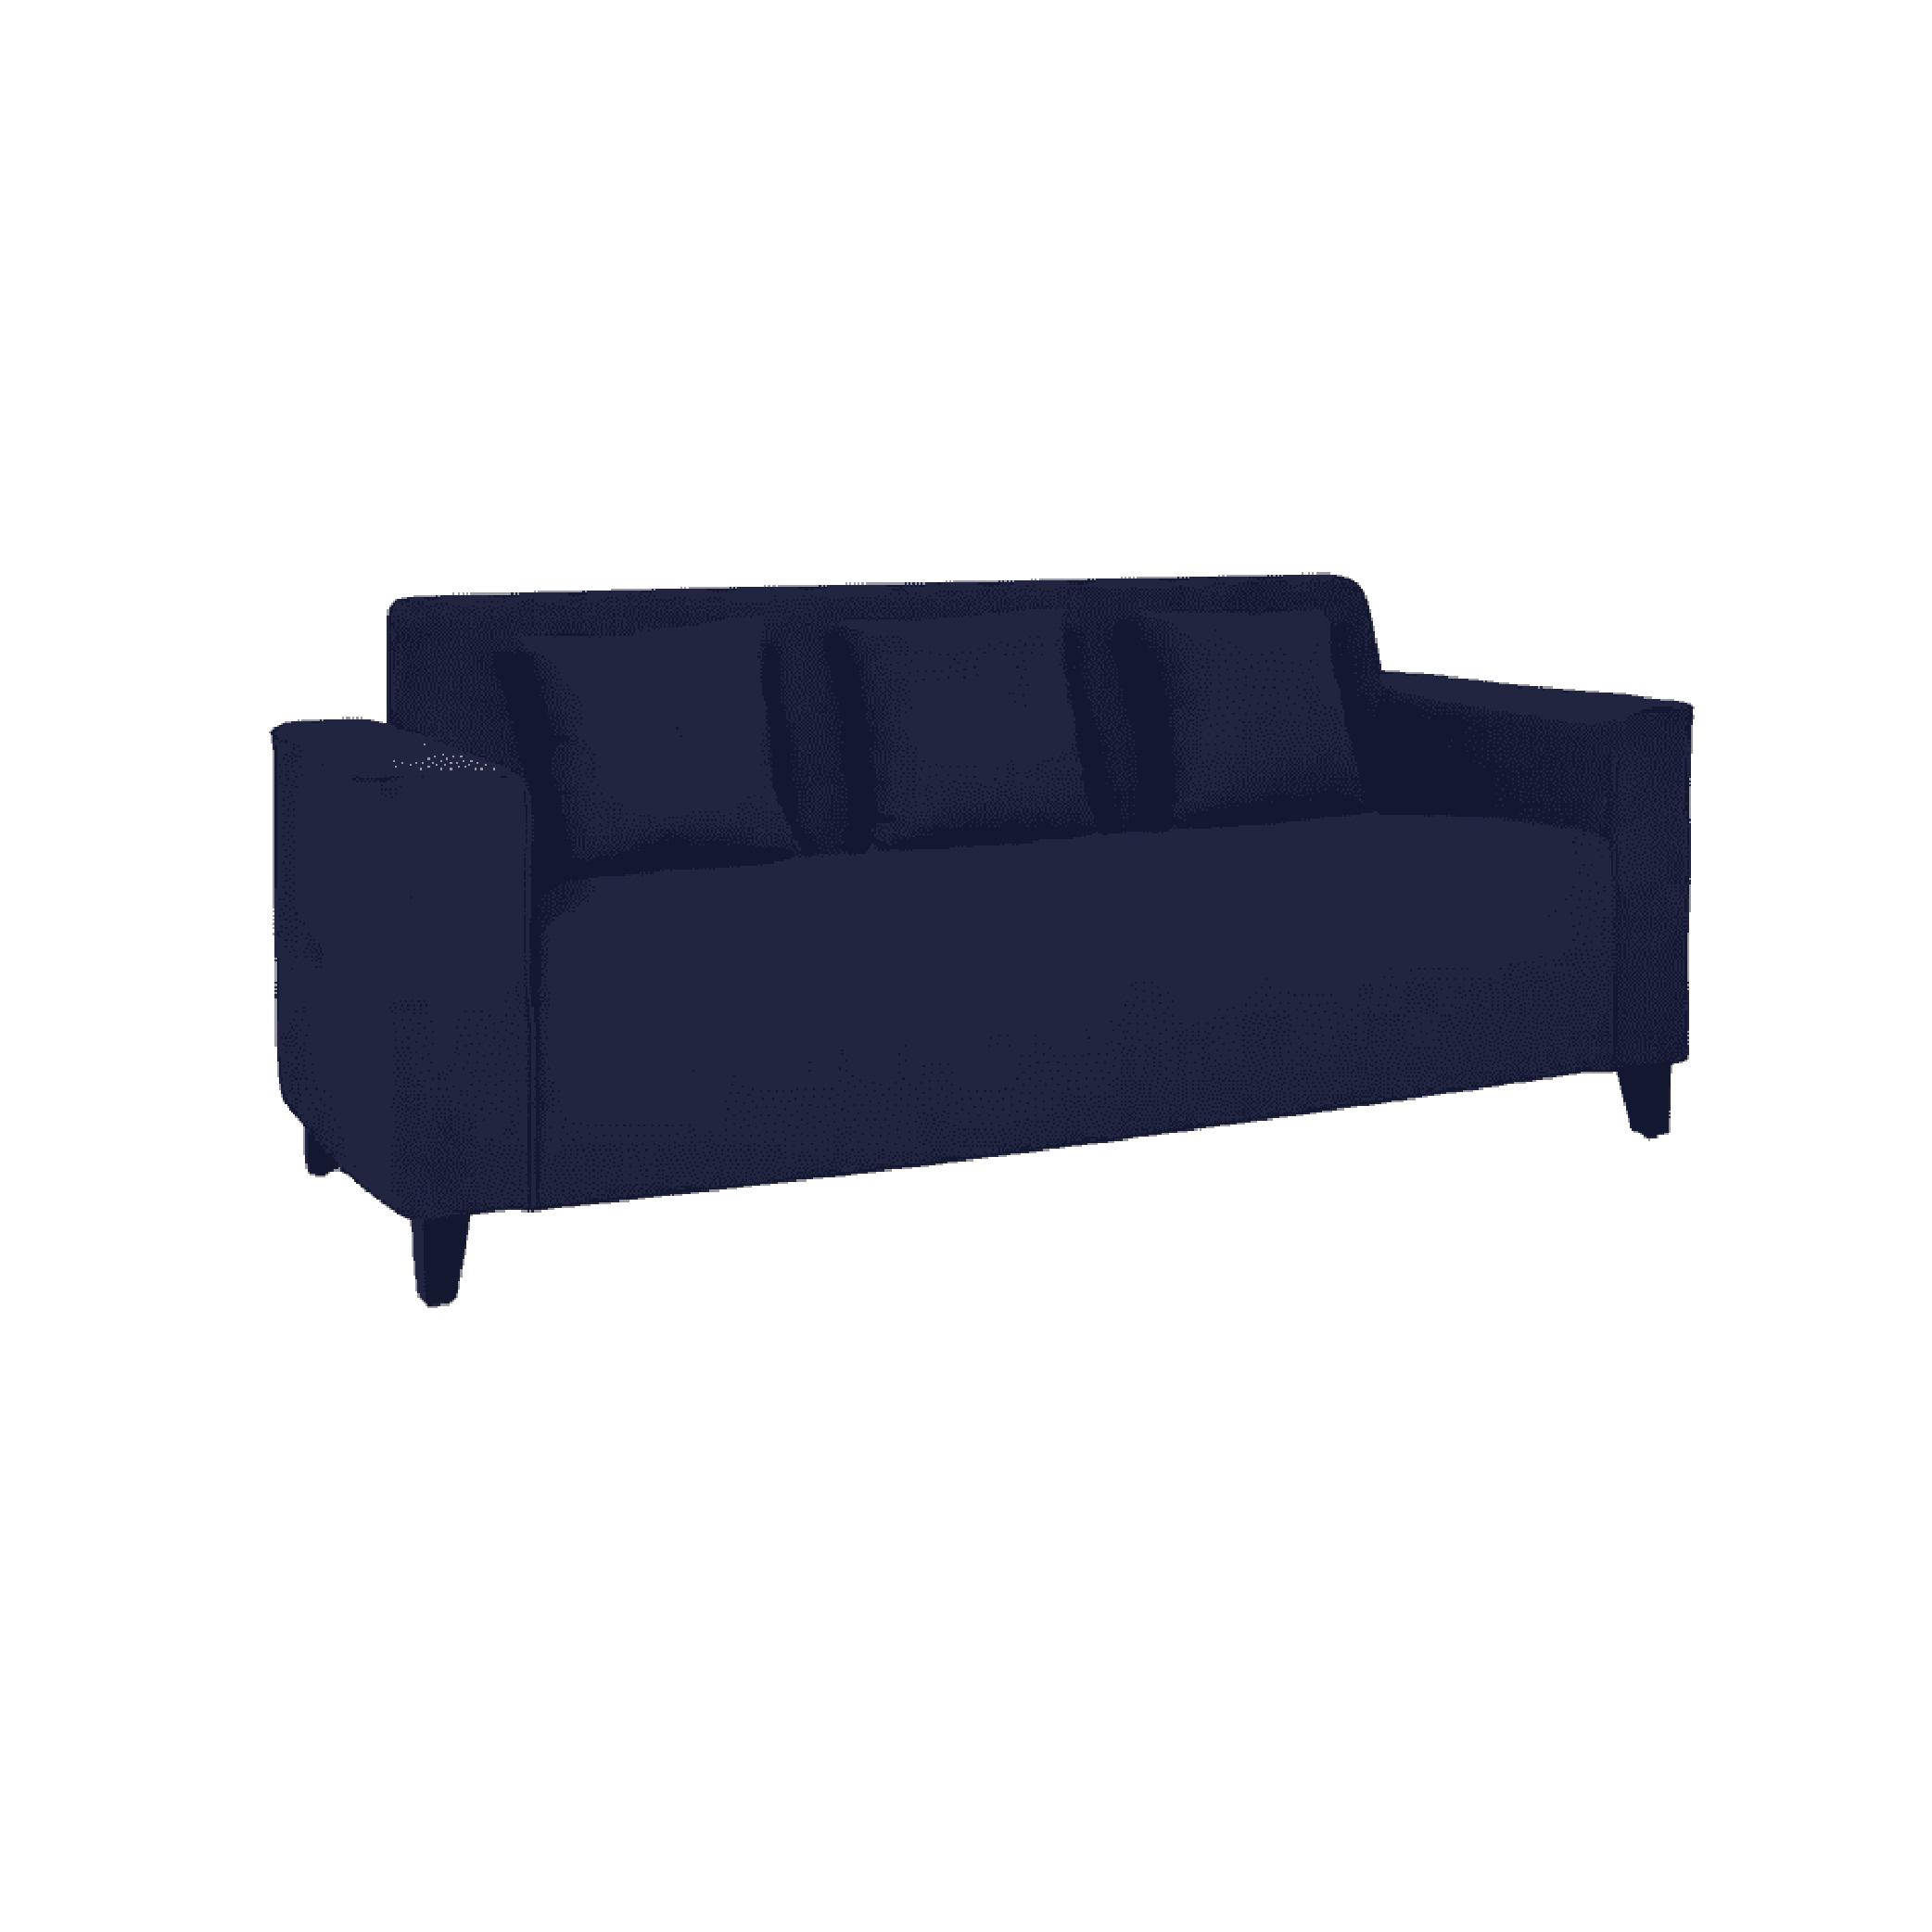 Faenza Three Seater Sofa in Navy Blue Colour